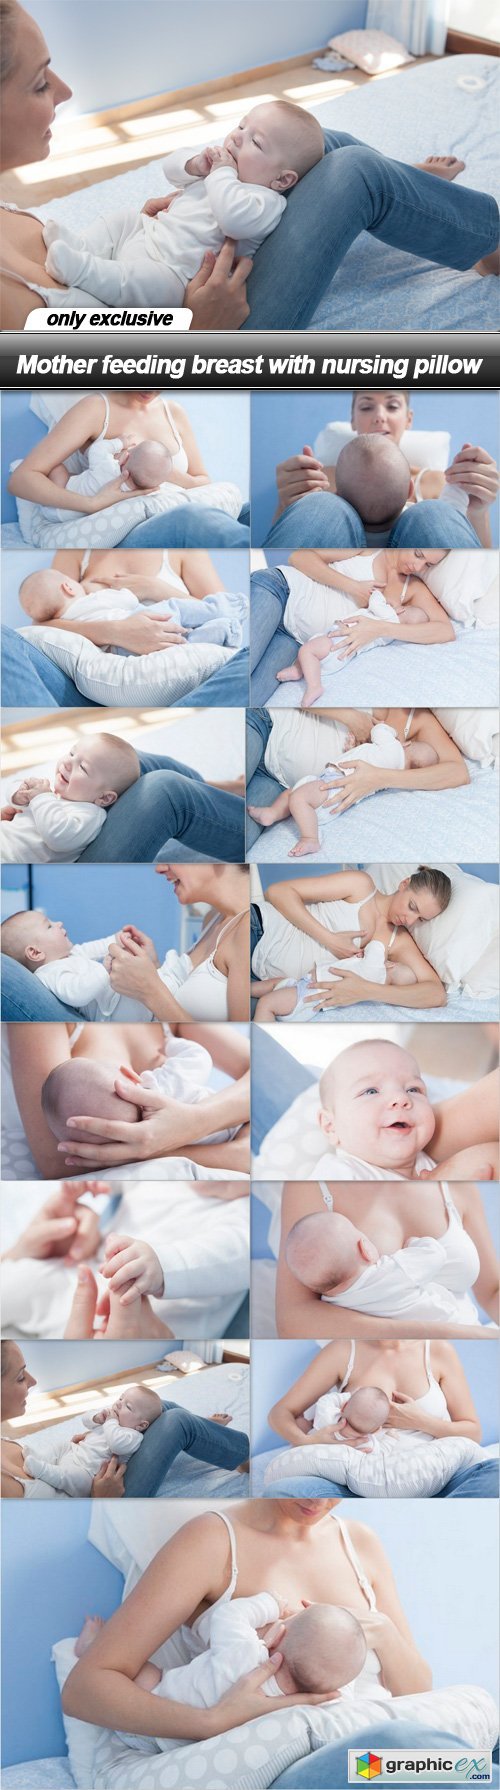 Mother feeding breast with nursing pillow - 15 UHQ JPEG